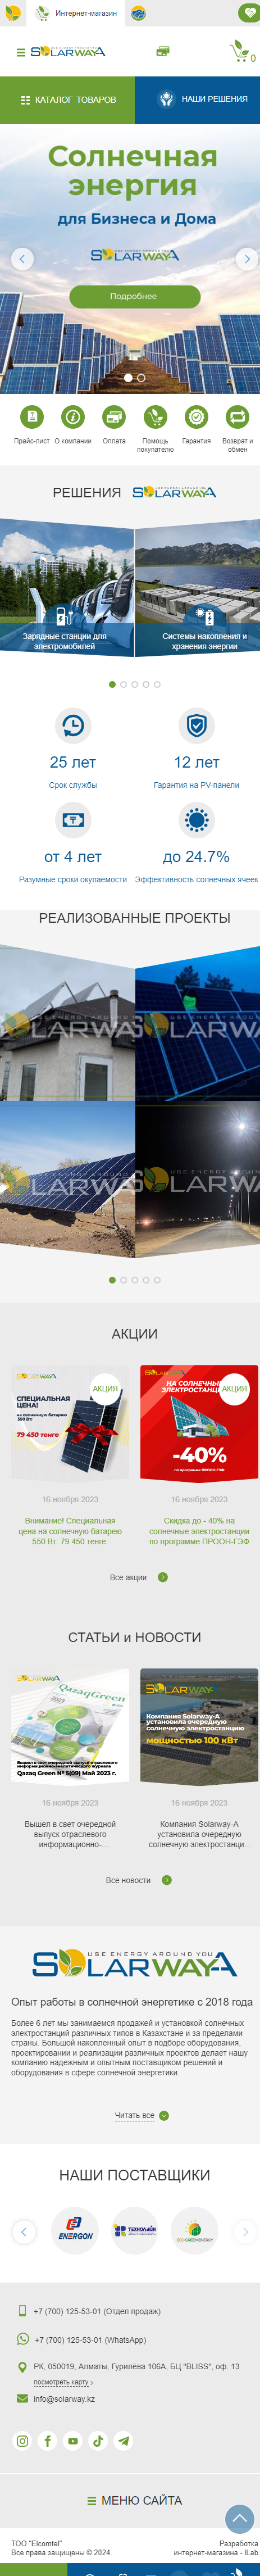 интернет магазин solarway